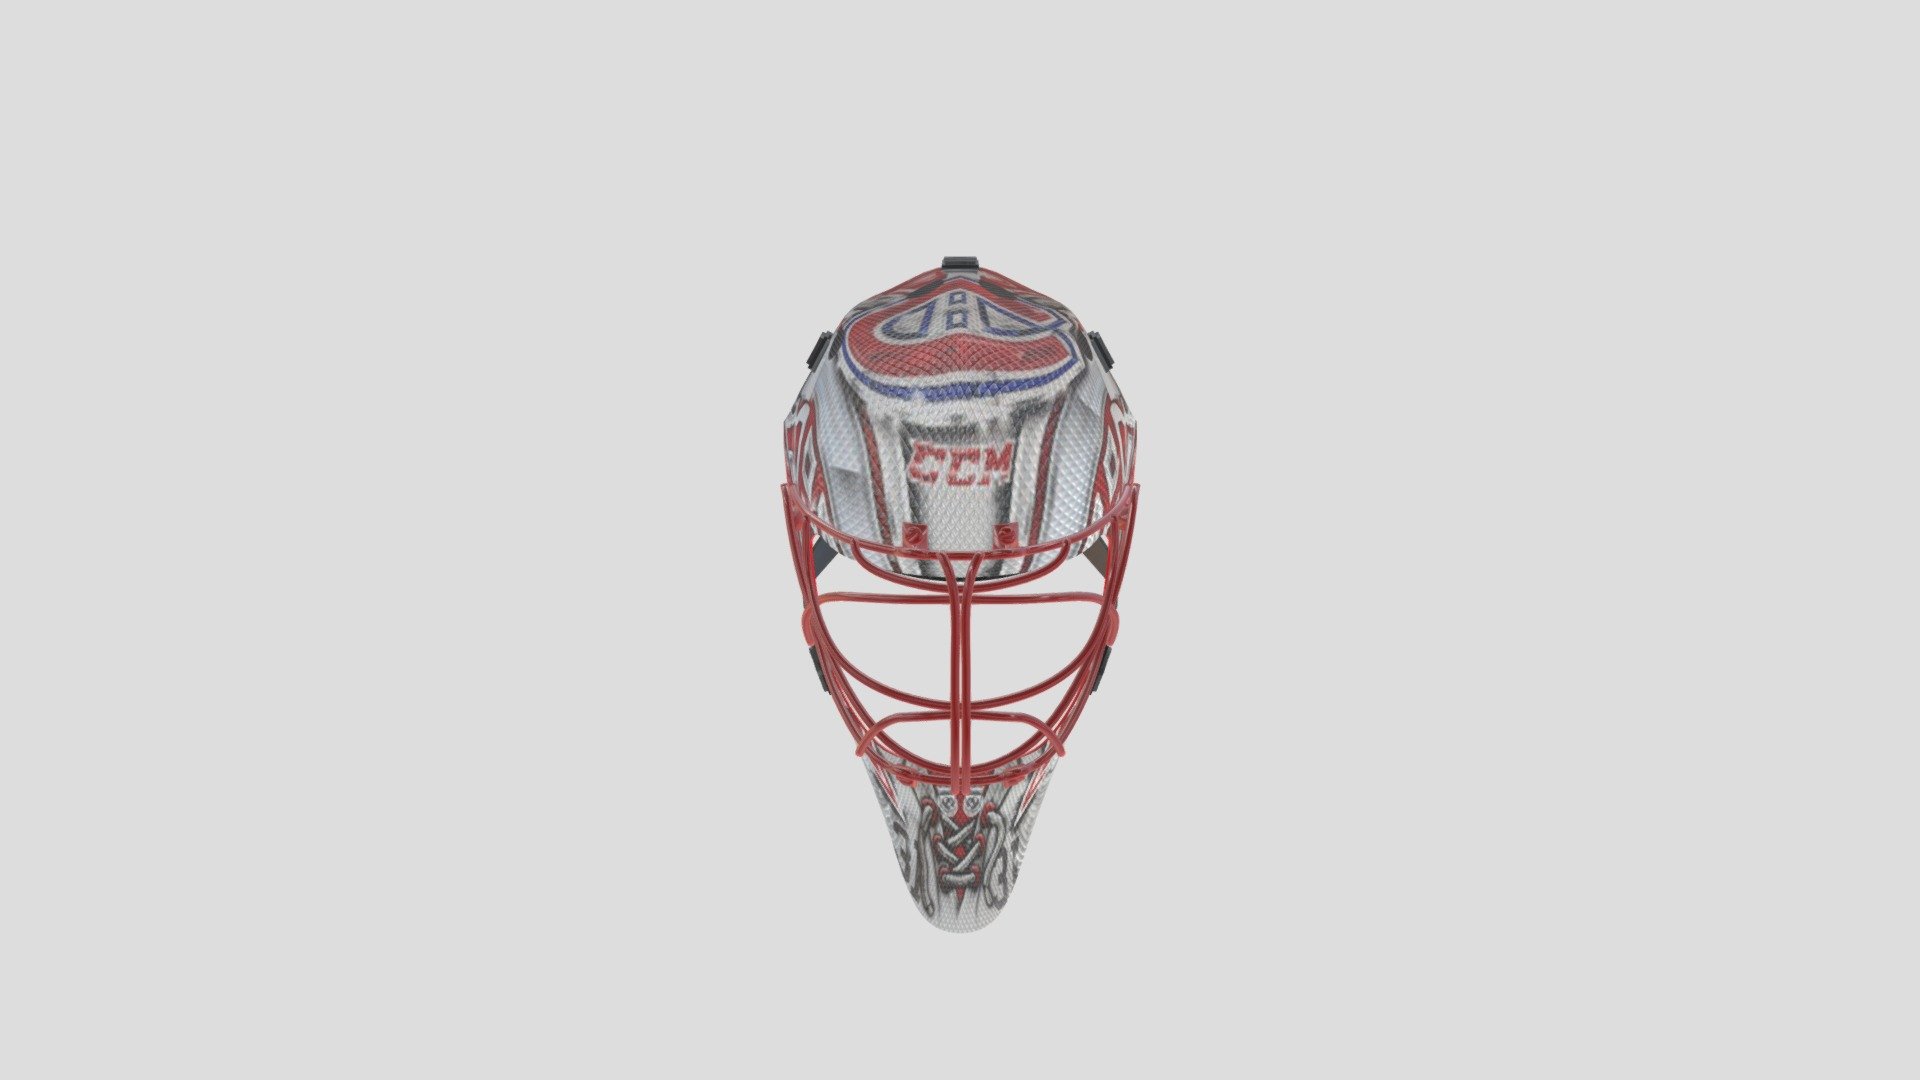 Goalie Mask 2 of rthe new PC hockey game - Goalie Mask 2 Final - 3D model by Studio NG2 (@StudioNG2) 3d model